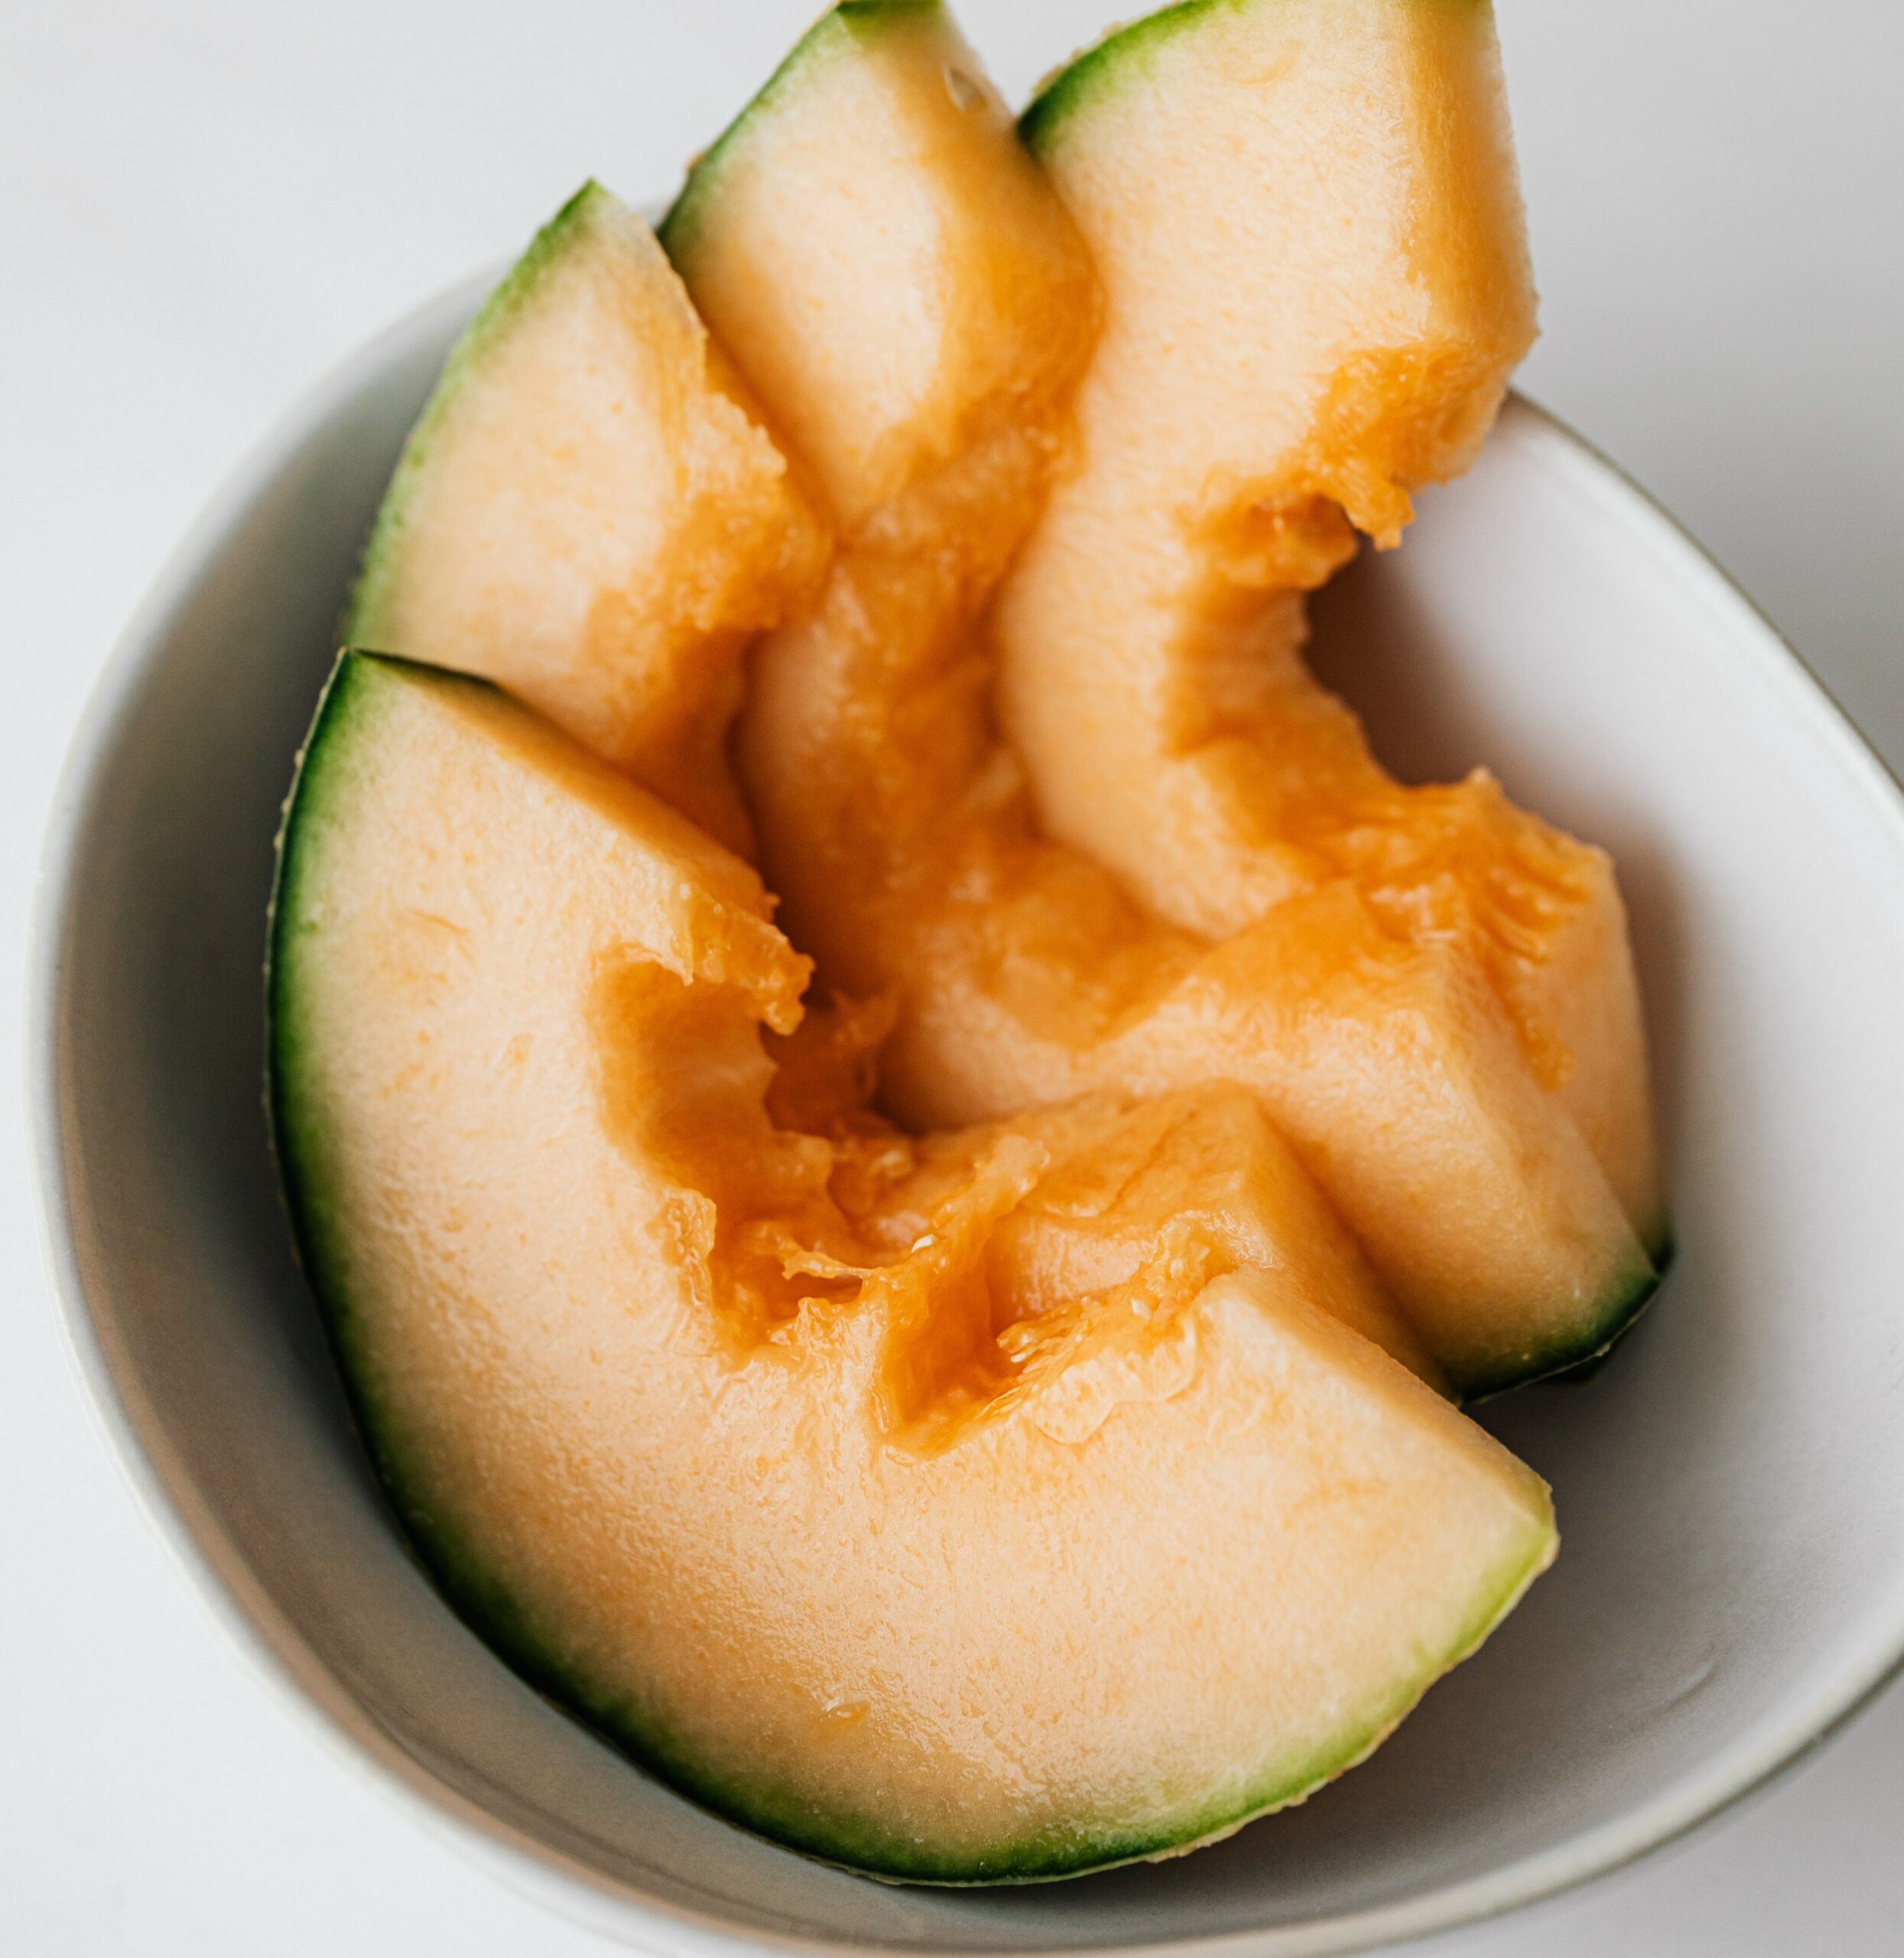 Healthy summer fruits you can enjoy by Johanna Hicks